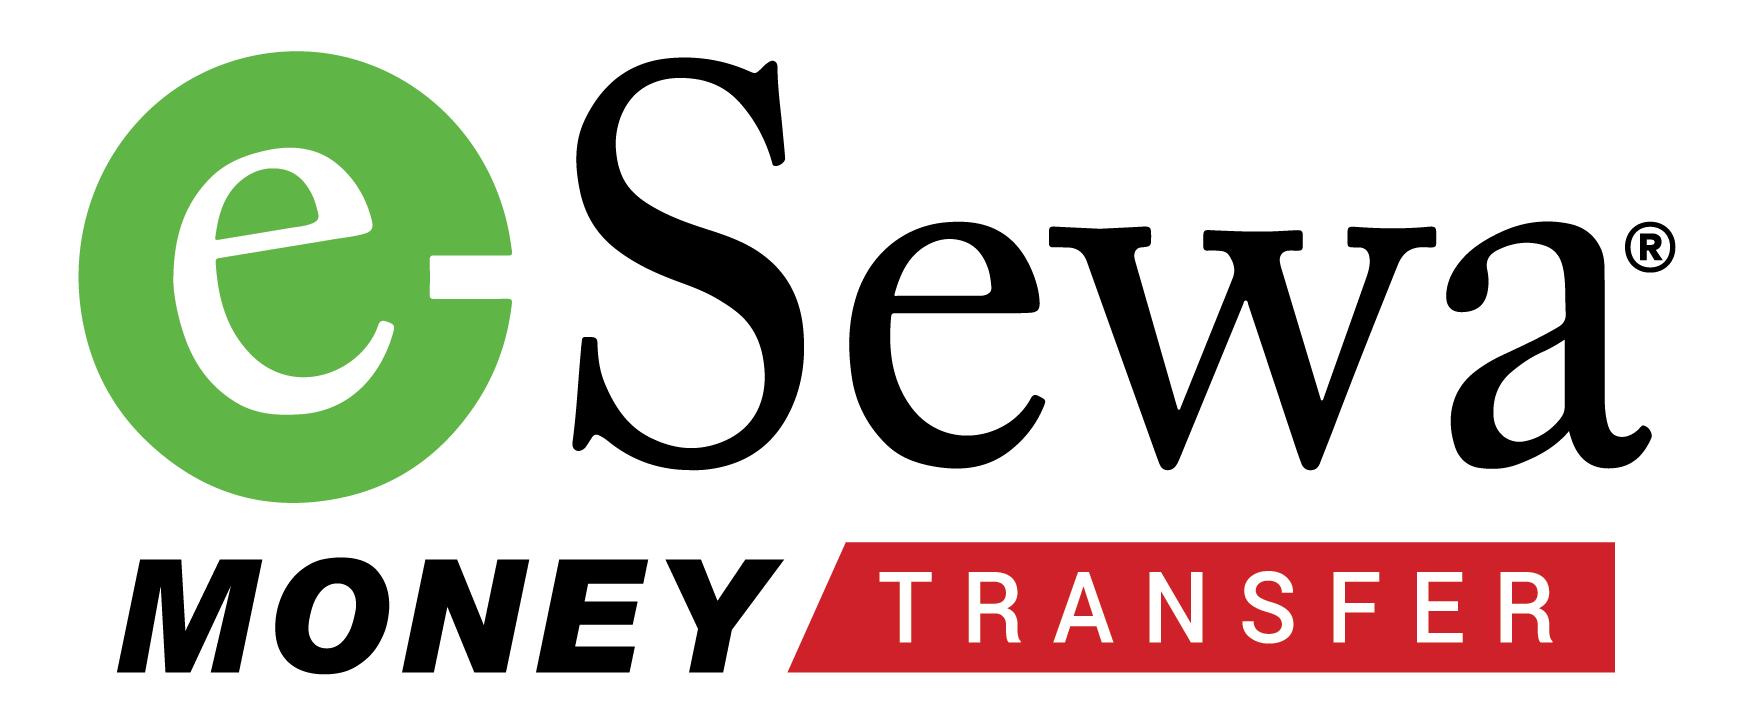 Esewa Money Transfer - Logo 4